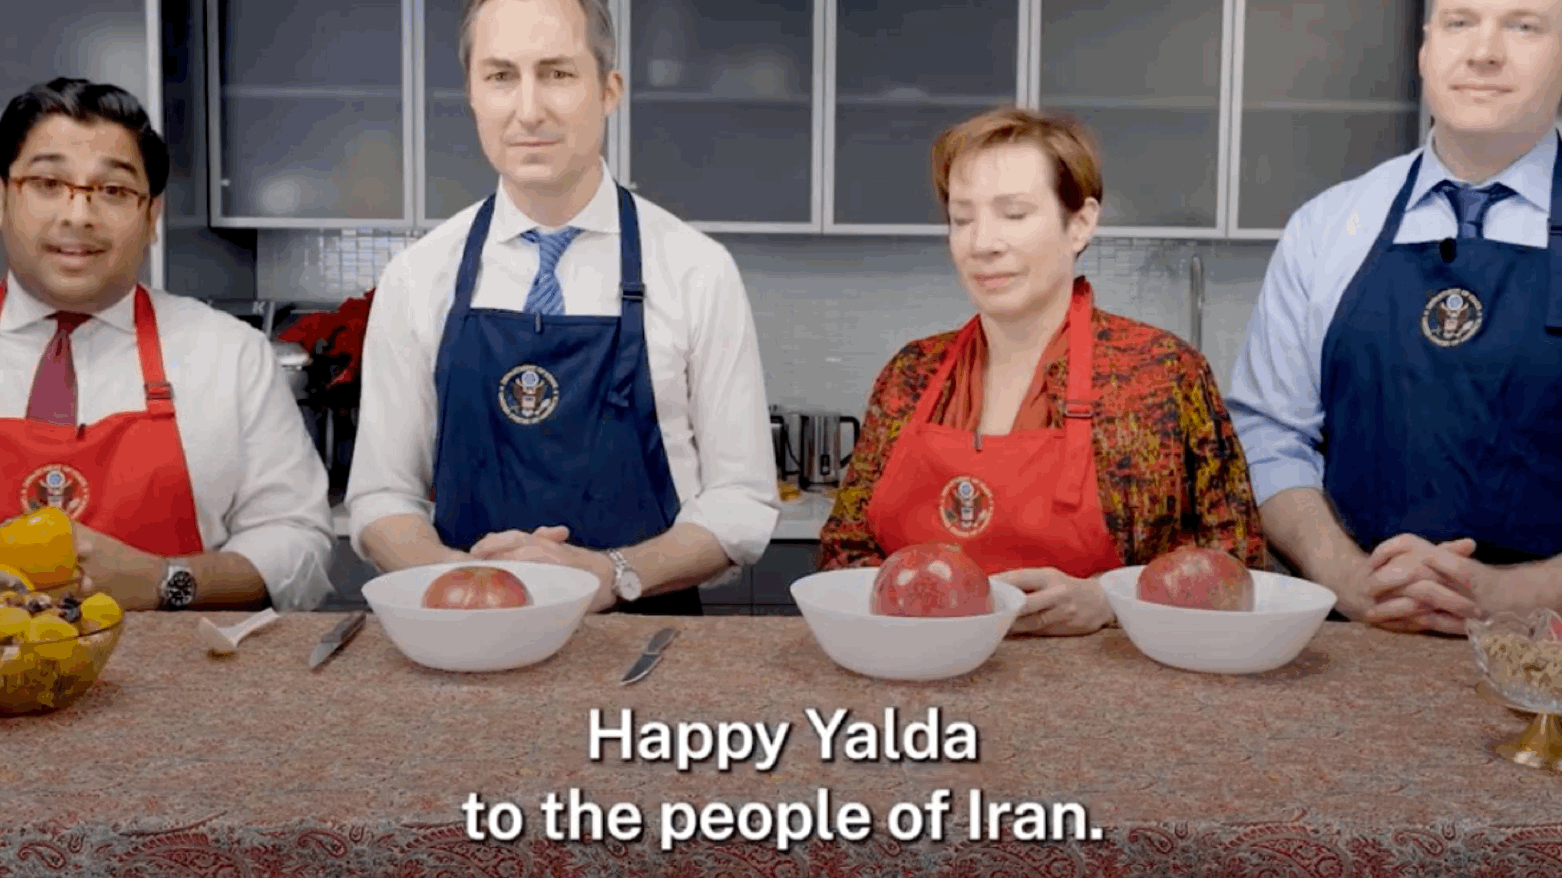 State Dept officials celebrating Yalda (Photo: Screengrab/U.S. State Department)